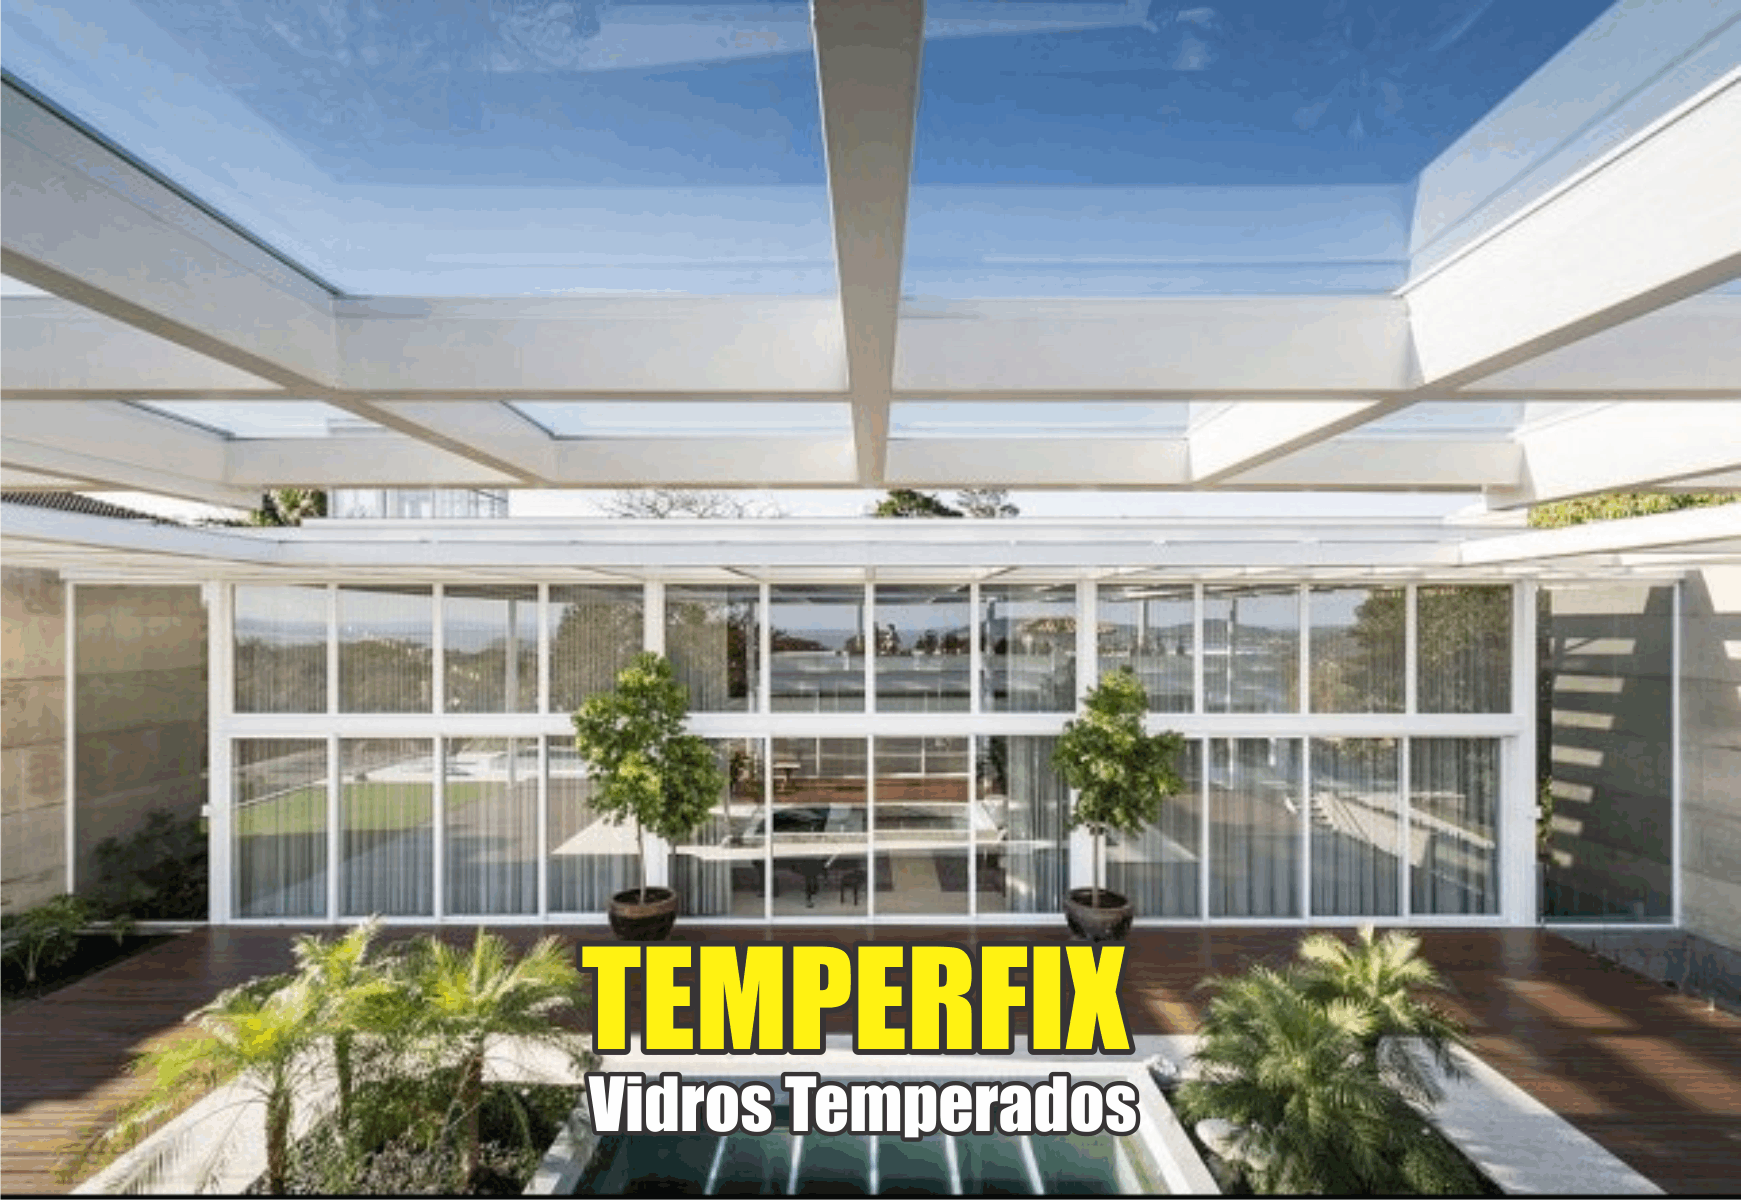 Temperfix Vidros Temperados      RUA GILBERTO PINTO MILEO, 494, CURITIBA - PR  Fones: (41) 99856-5977 /